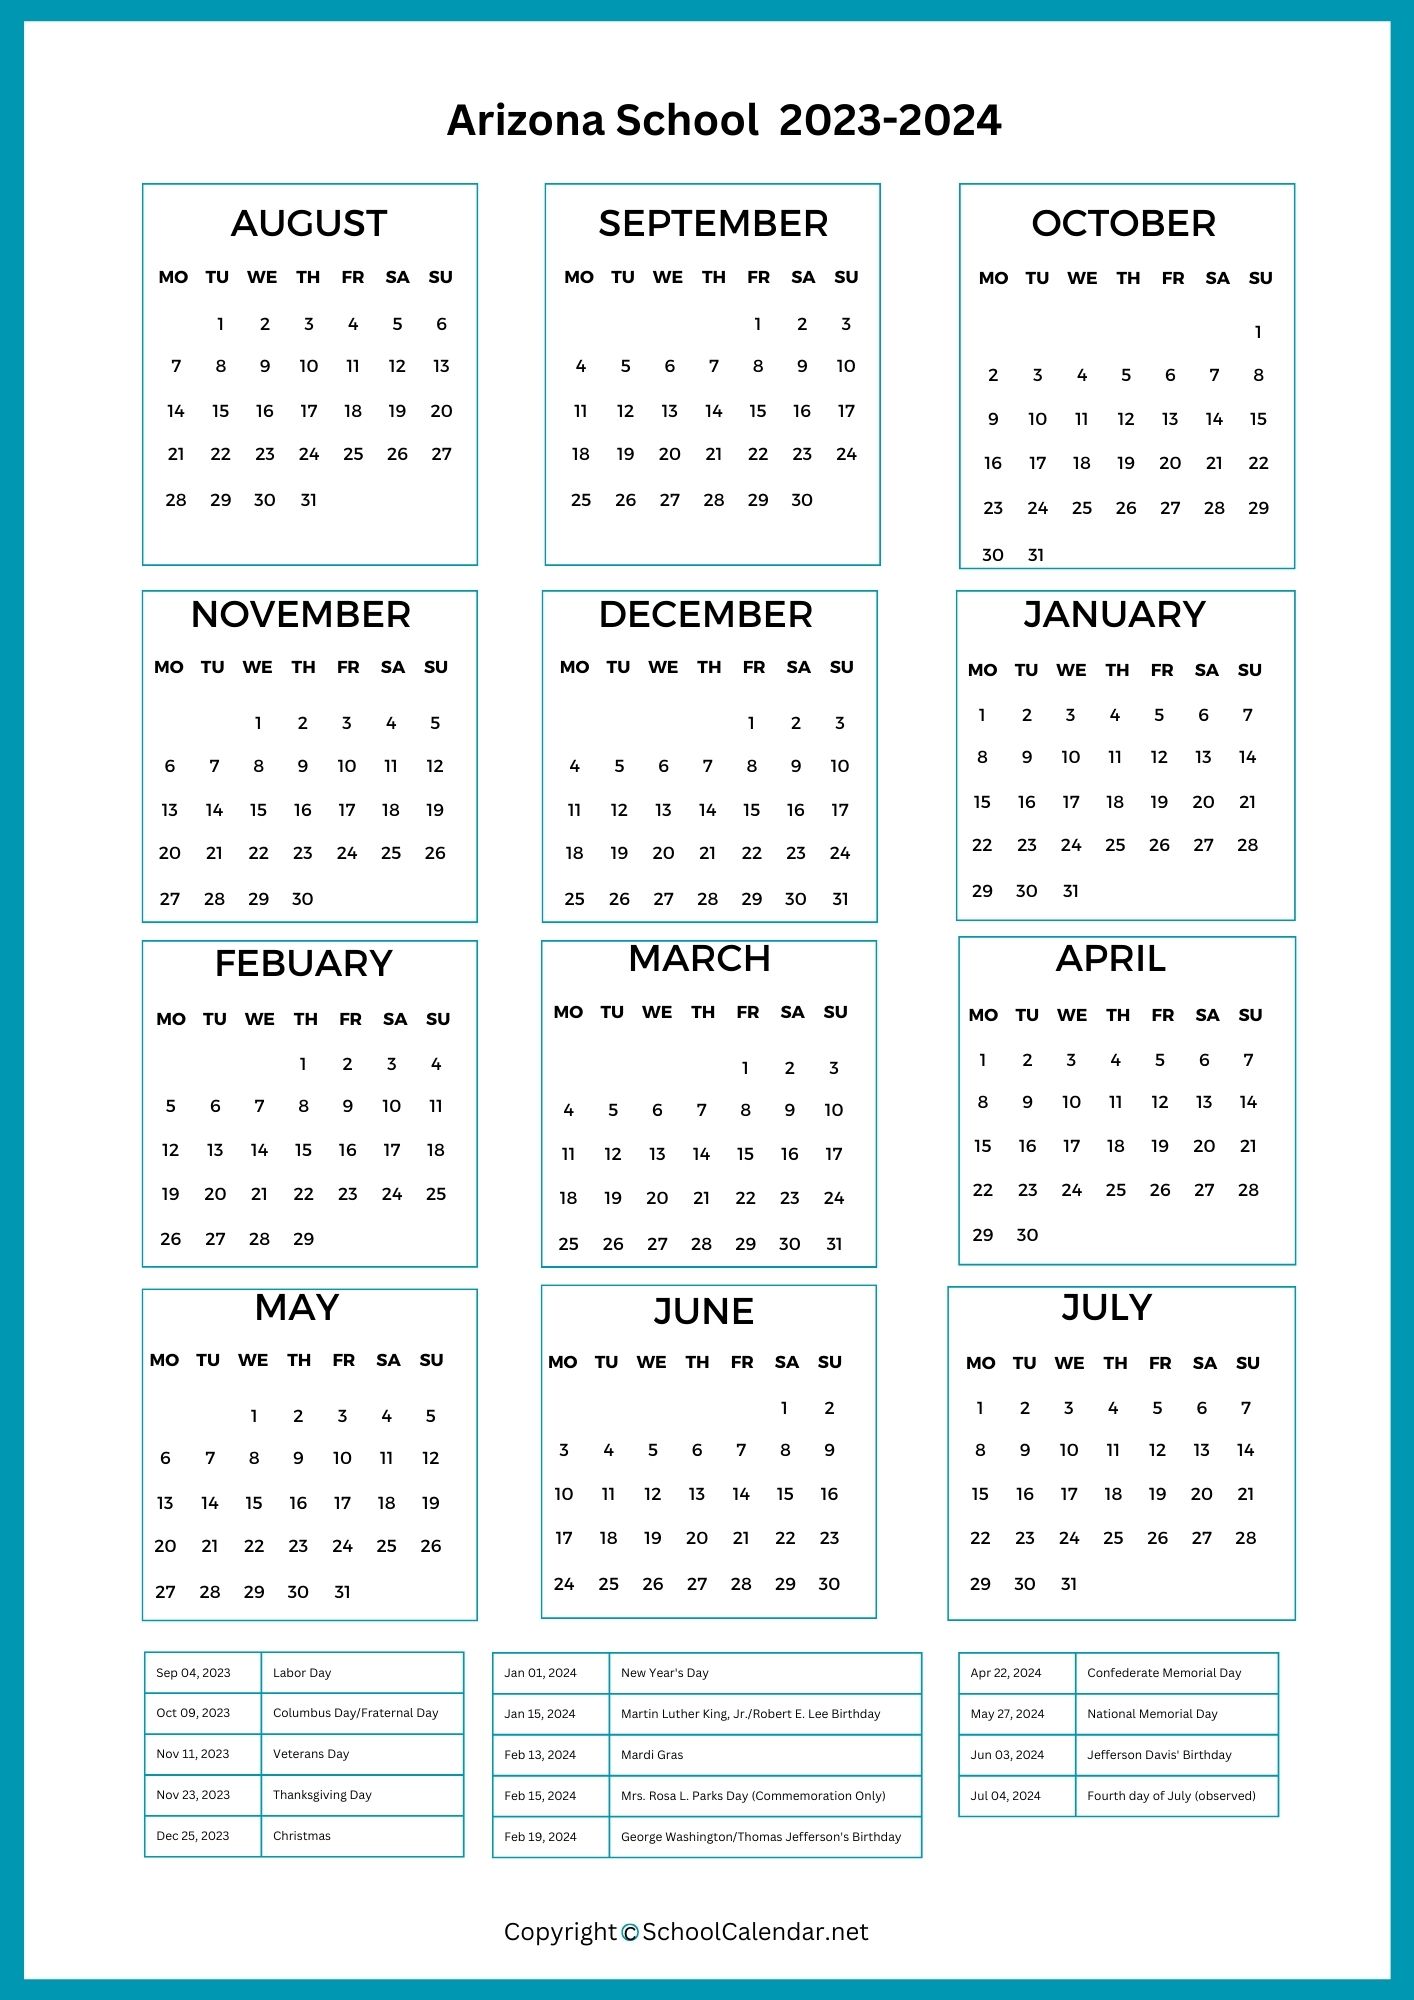 Arizona School Holiday Calendar 2023